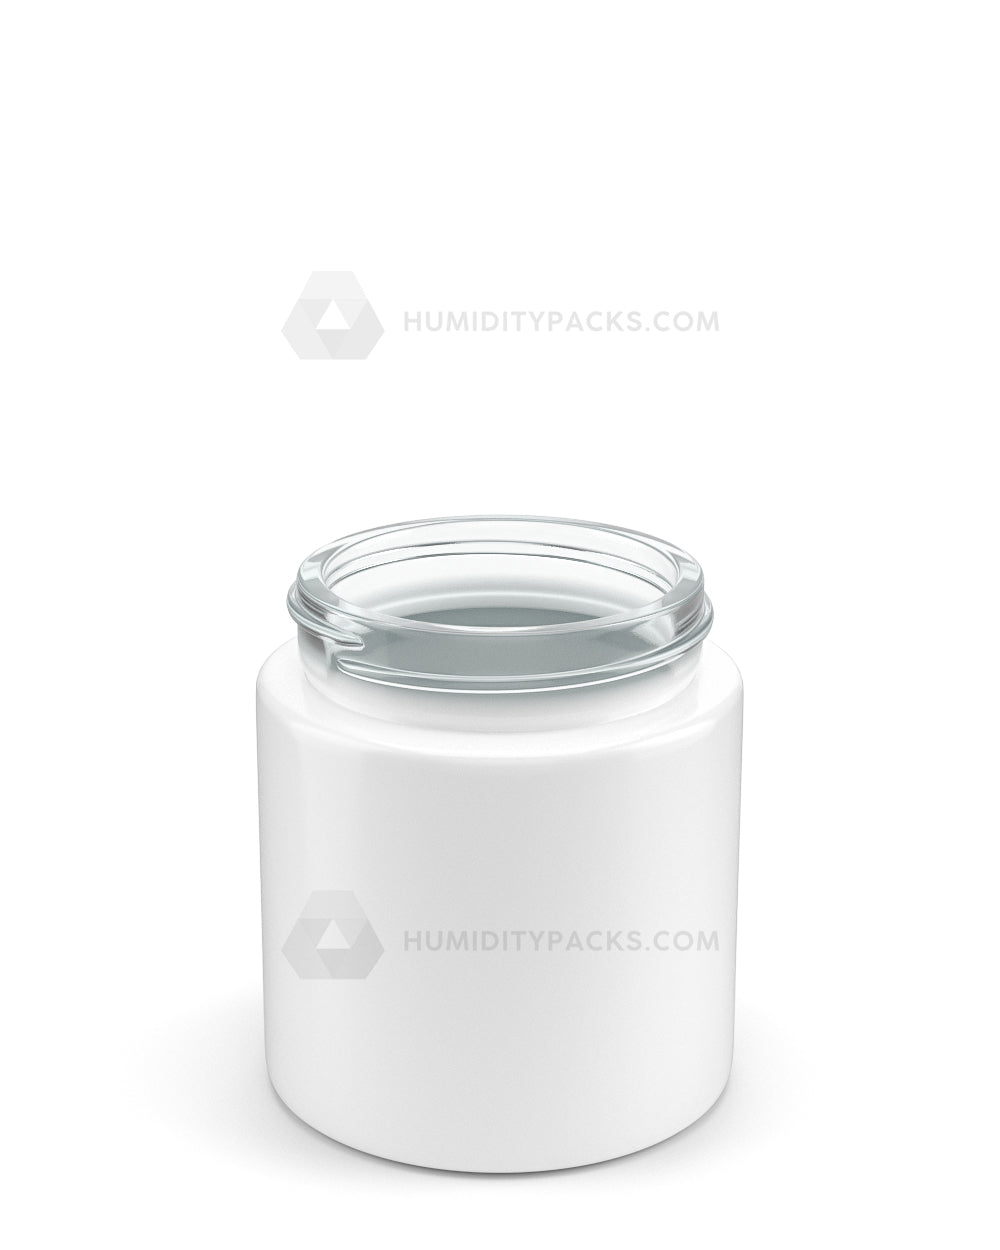 50mm Straight Sided Glossy White 3oz Glass Jar 100/Box Humidity Packs - 2